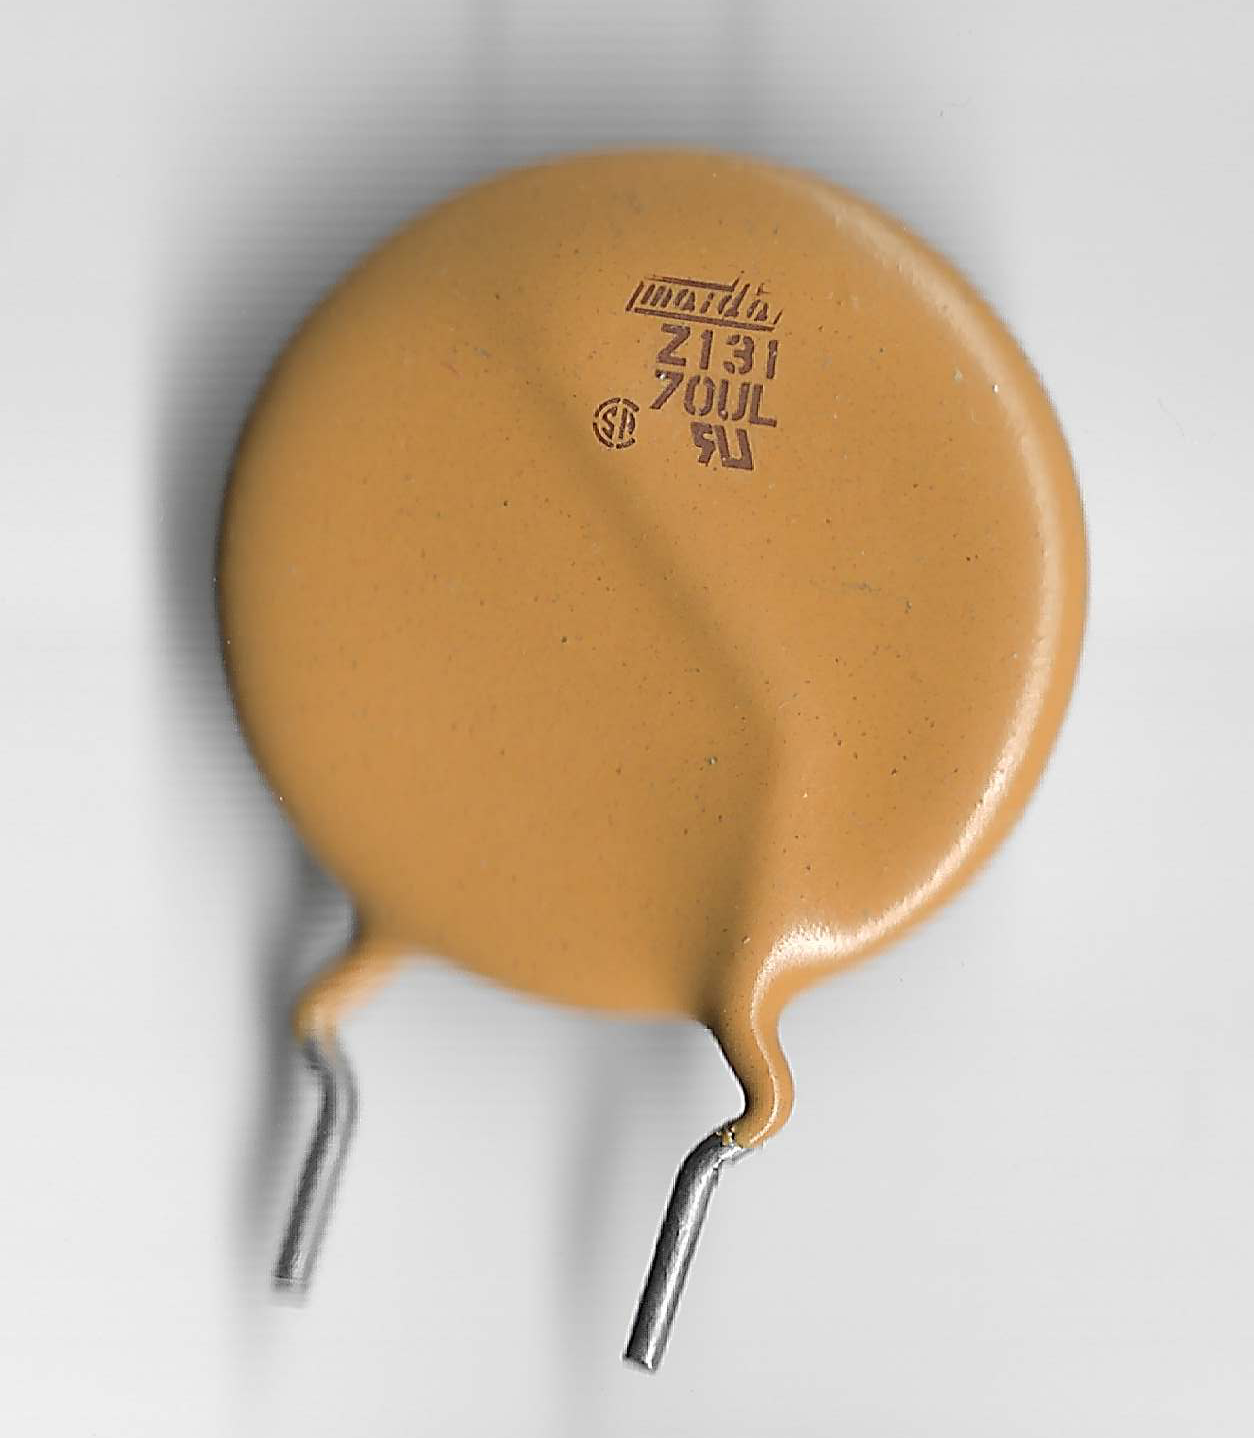 Z131-70UL Zinc Oxide Varistor MOV 130 VAC / 175 VDC continuous